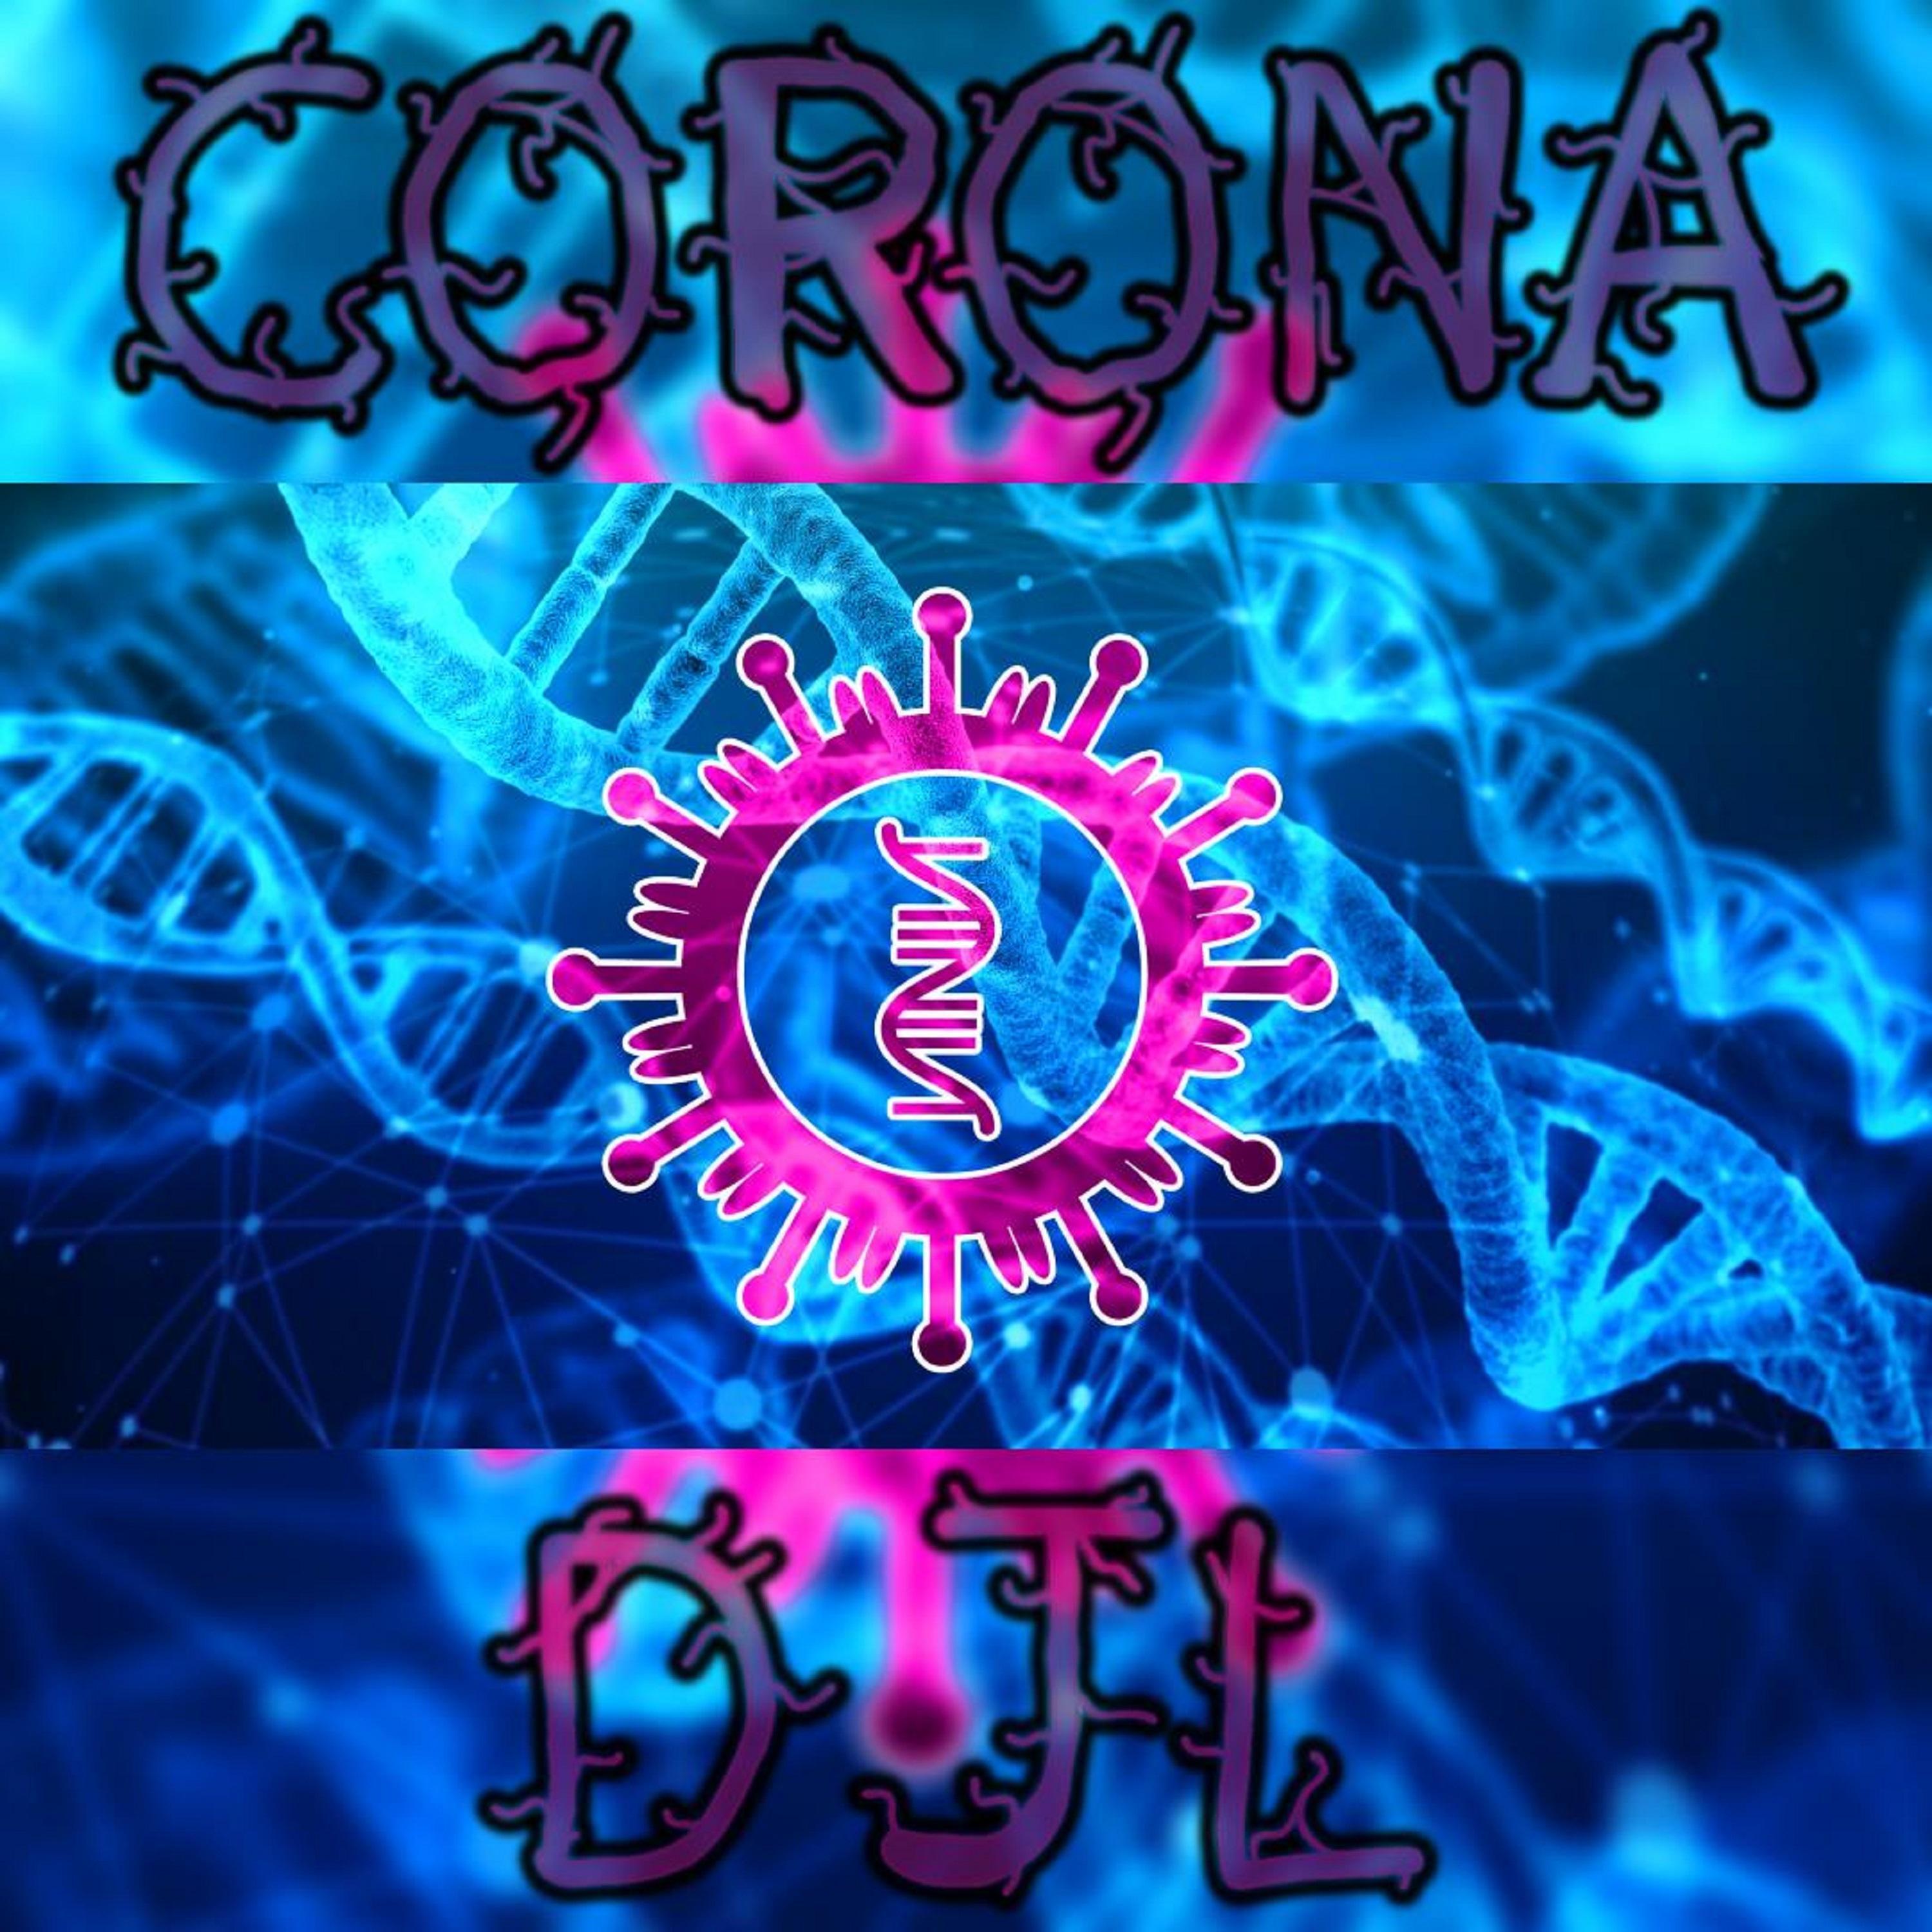 DJL - Corona